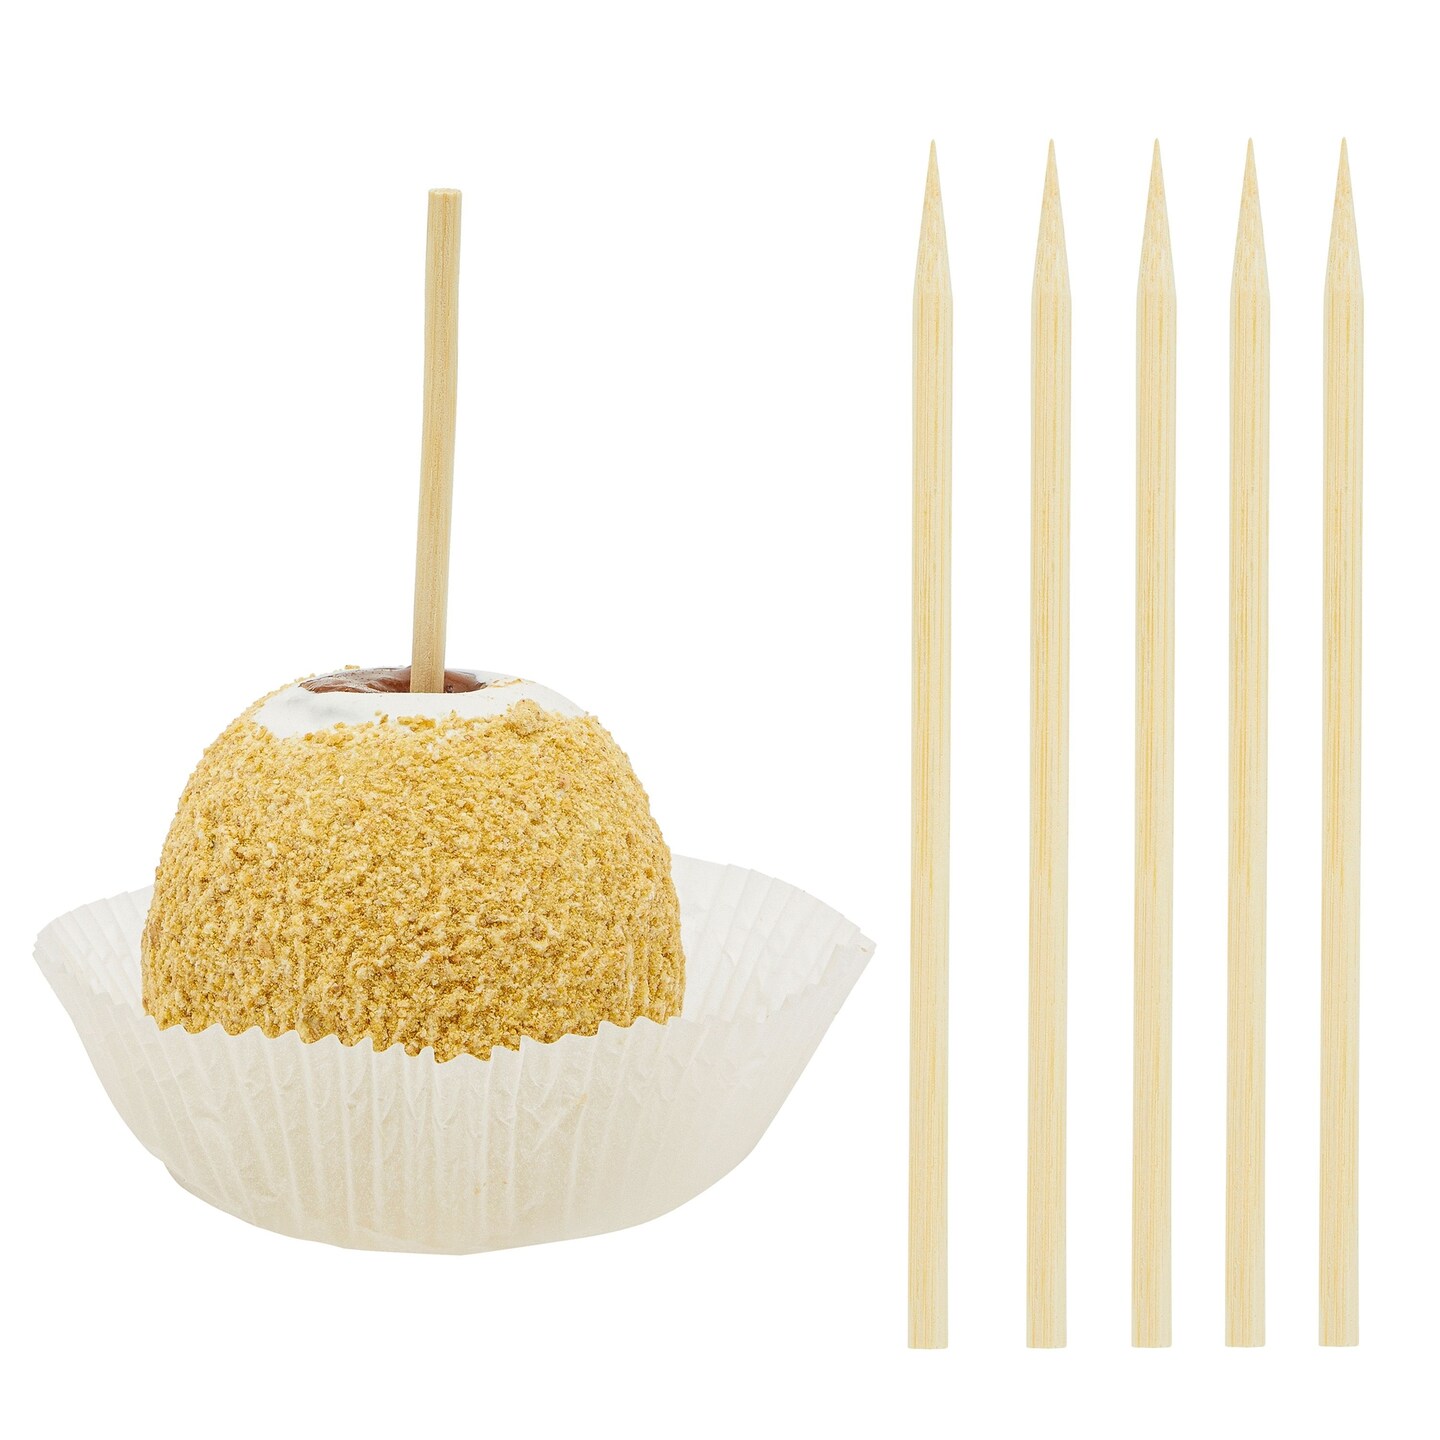 Honey comb popsicle/ candy apple sticks – Crafty Cake Shop